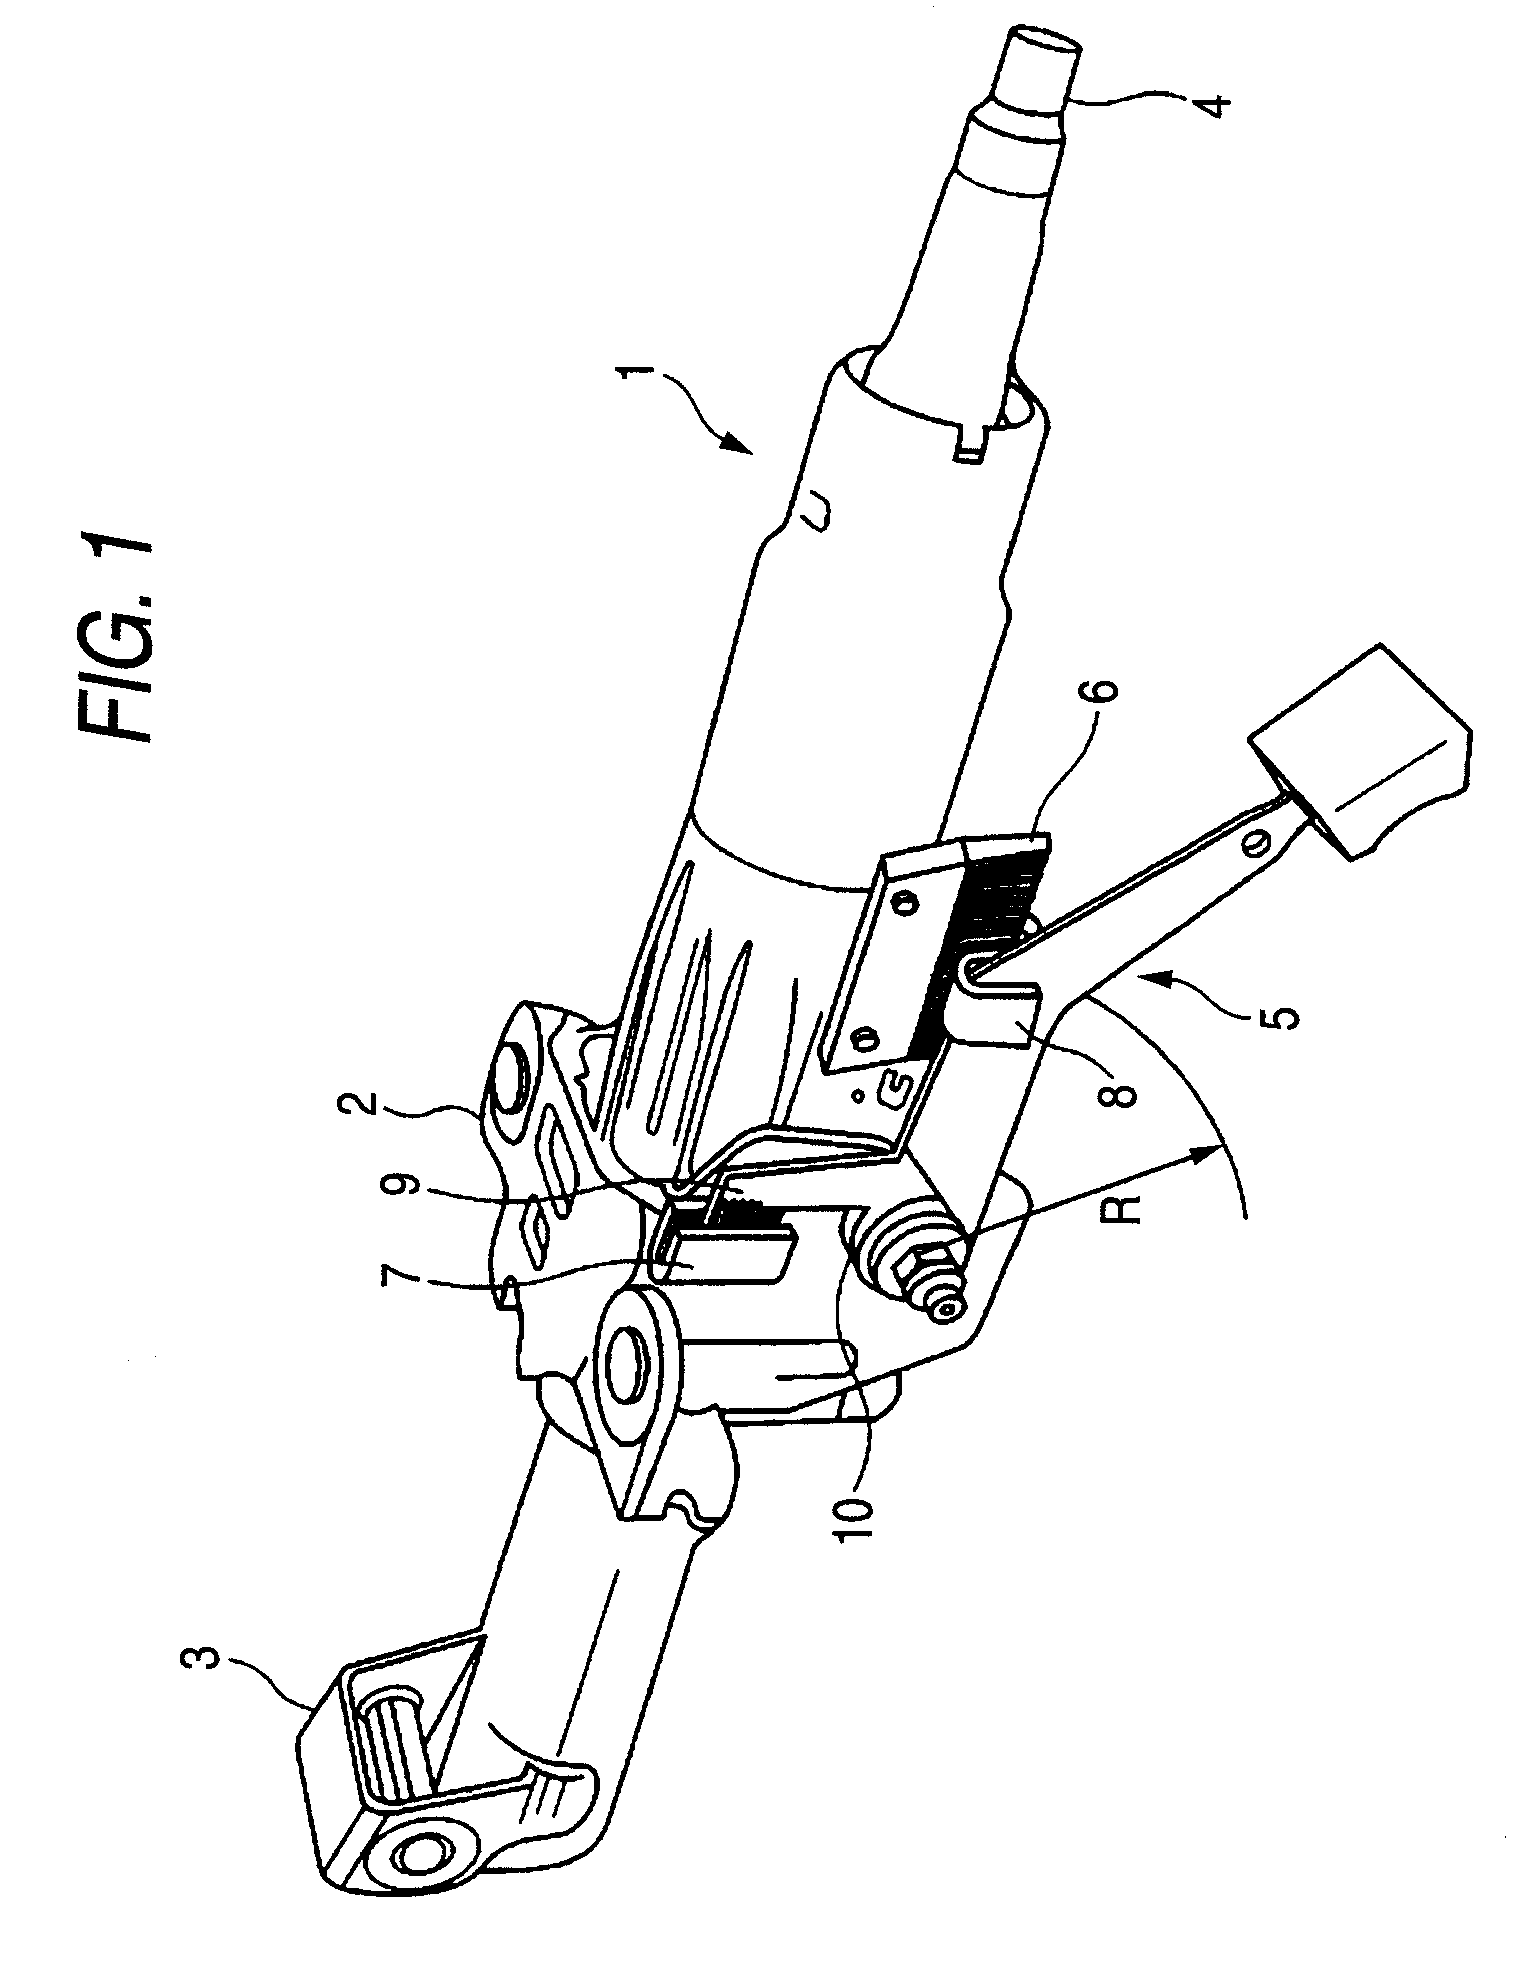 Steering column apparatus